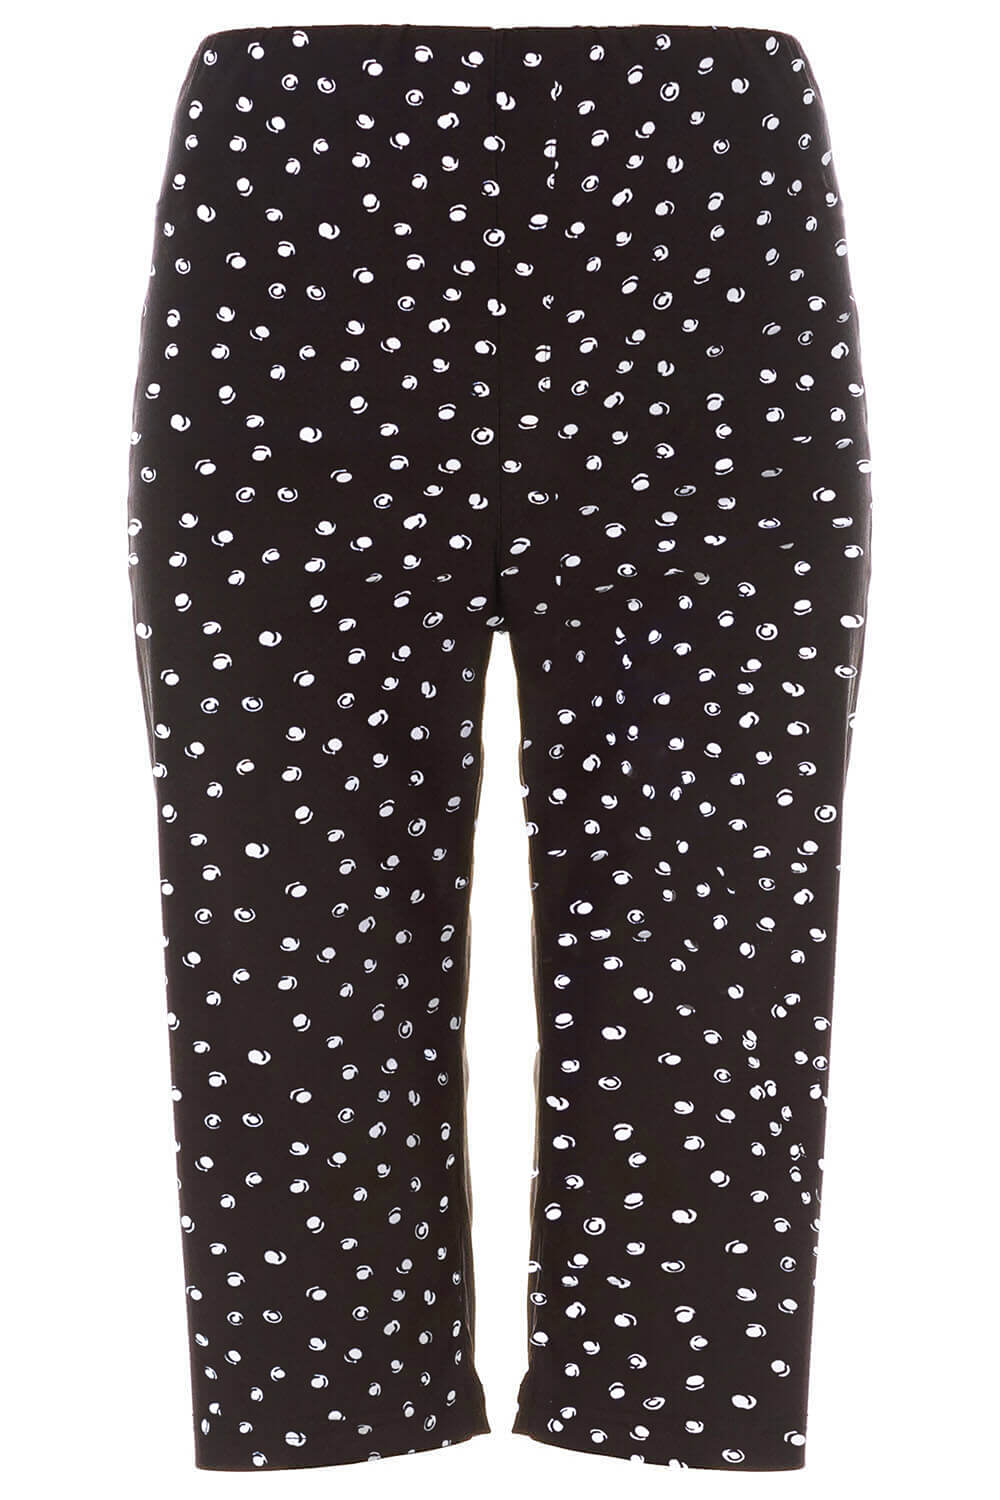 Black Polka Dot Stretch Knee Length Shorts, Image 4 of 4